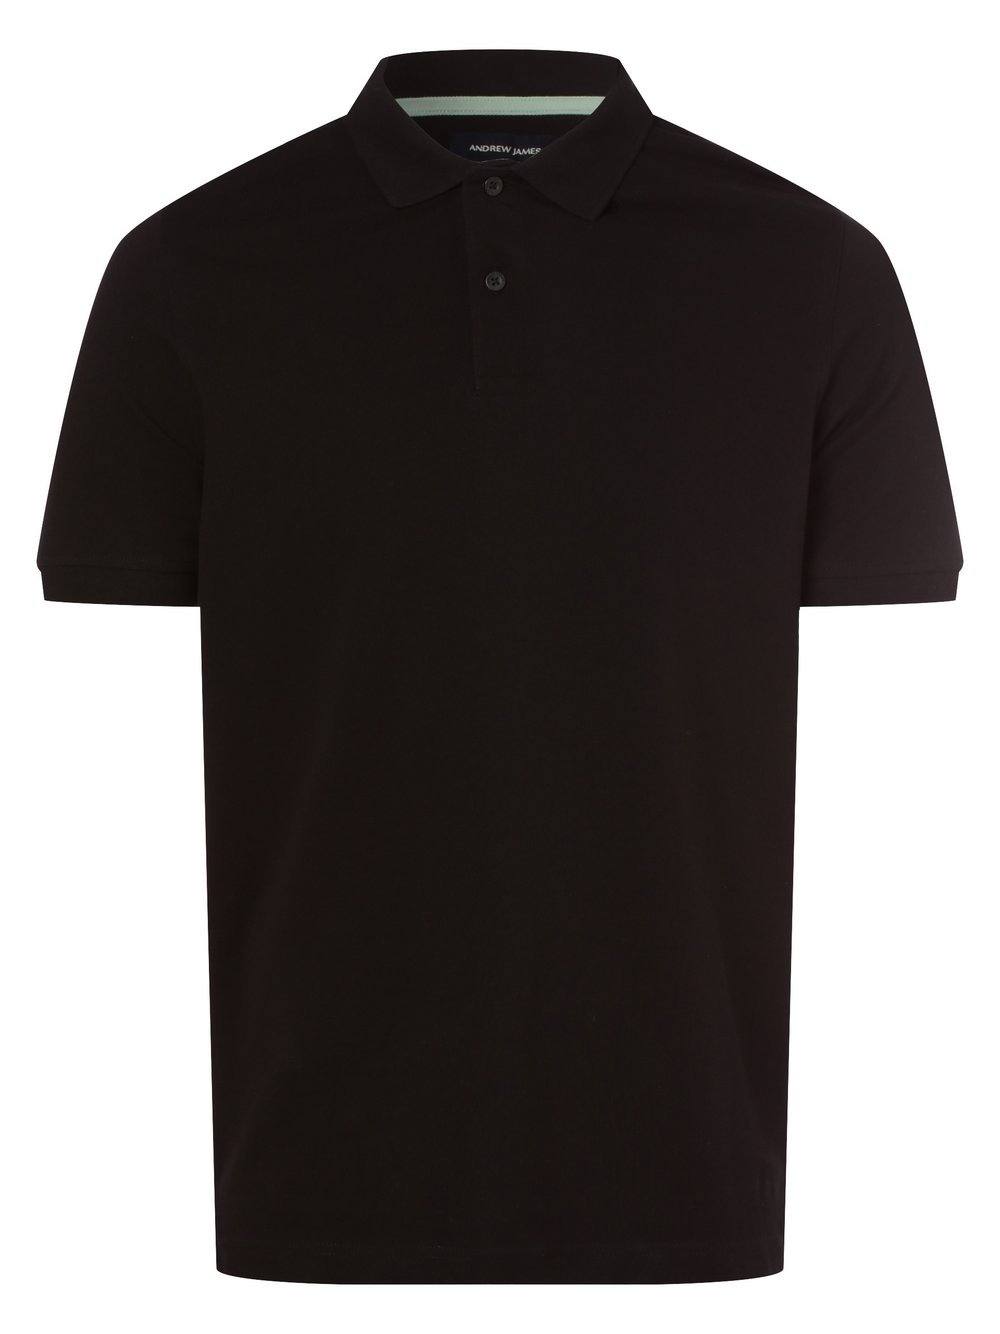 Andrew James - Męska koszulka polo, czarny